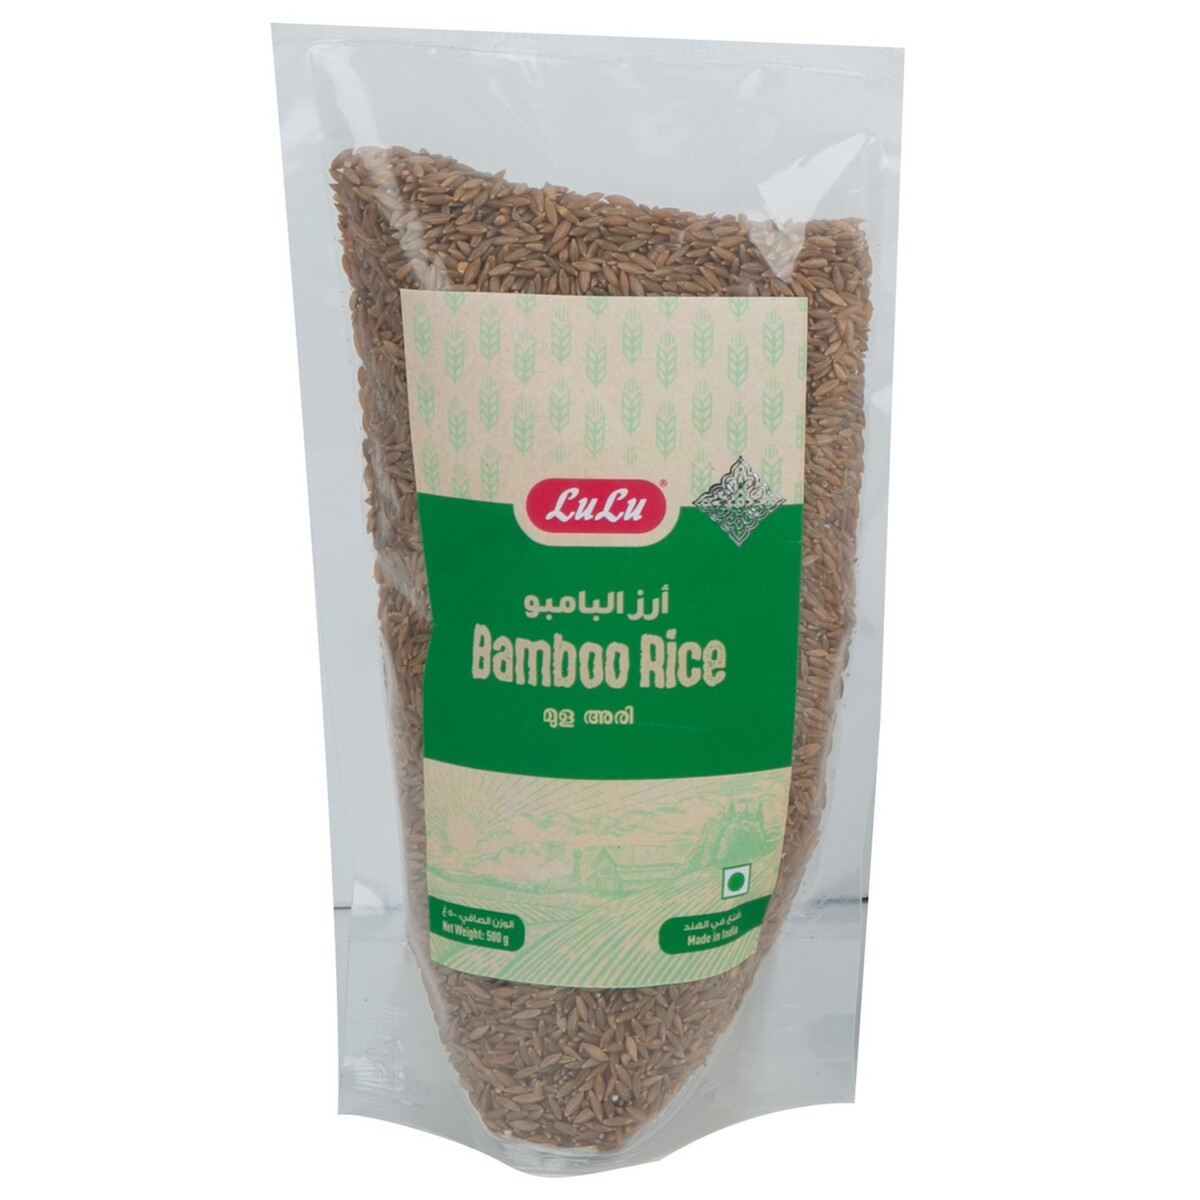 Lulu Bamboo Rice 500g